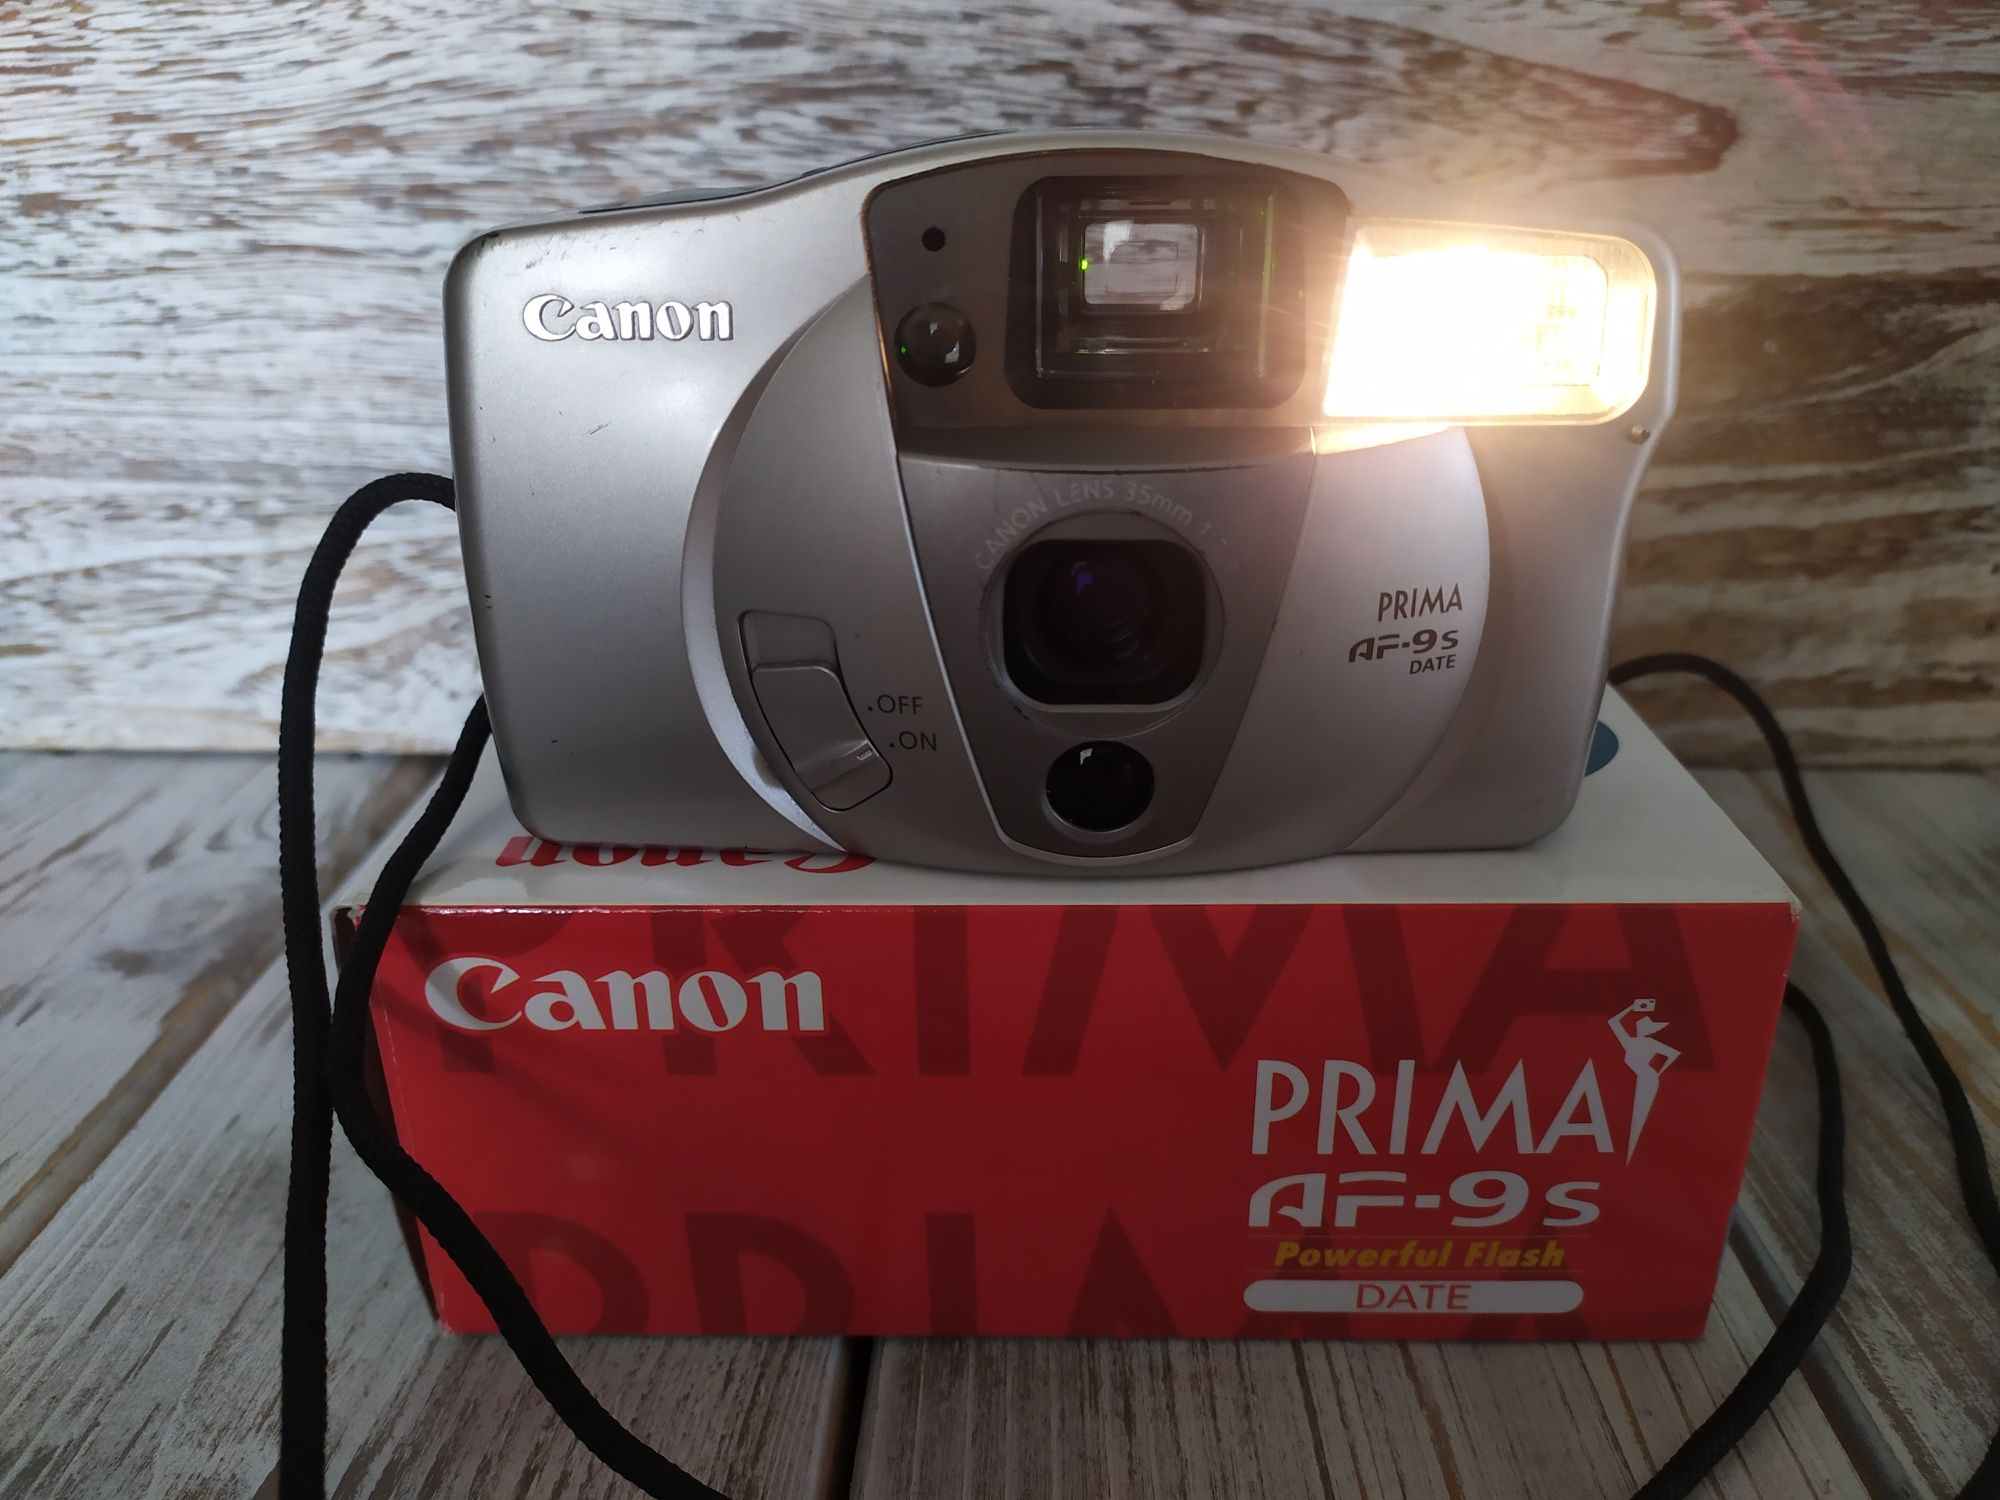 Aparat analogowy Canon Prima AF-9s